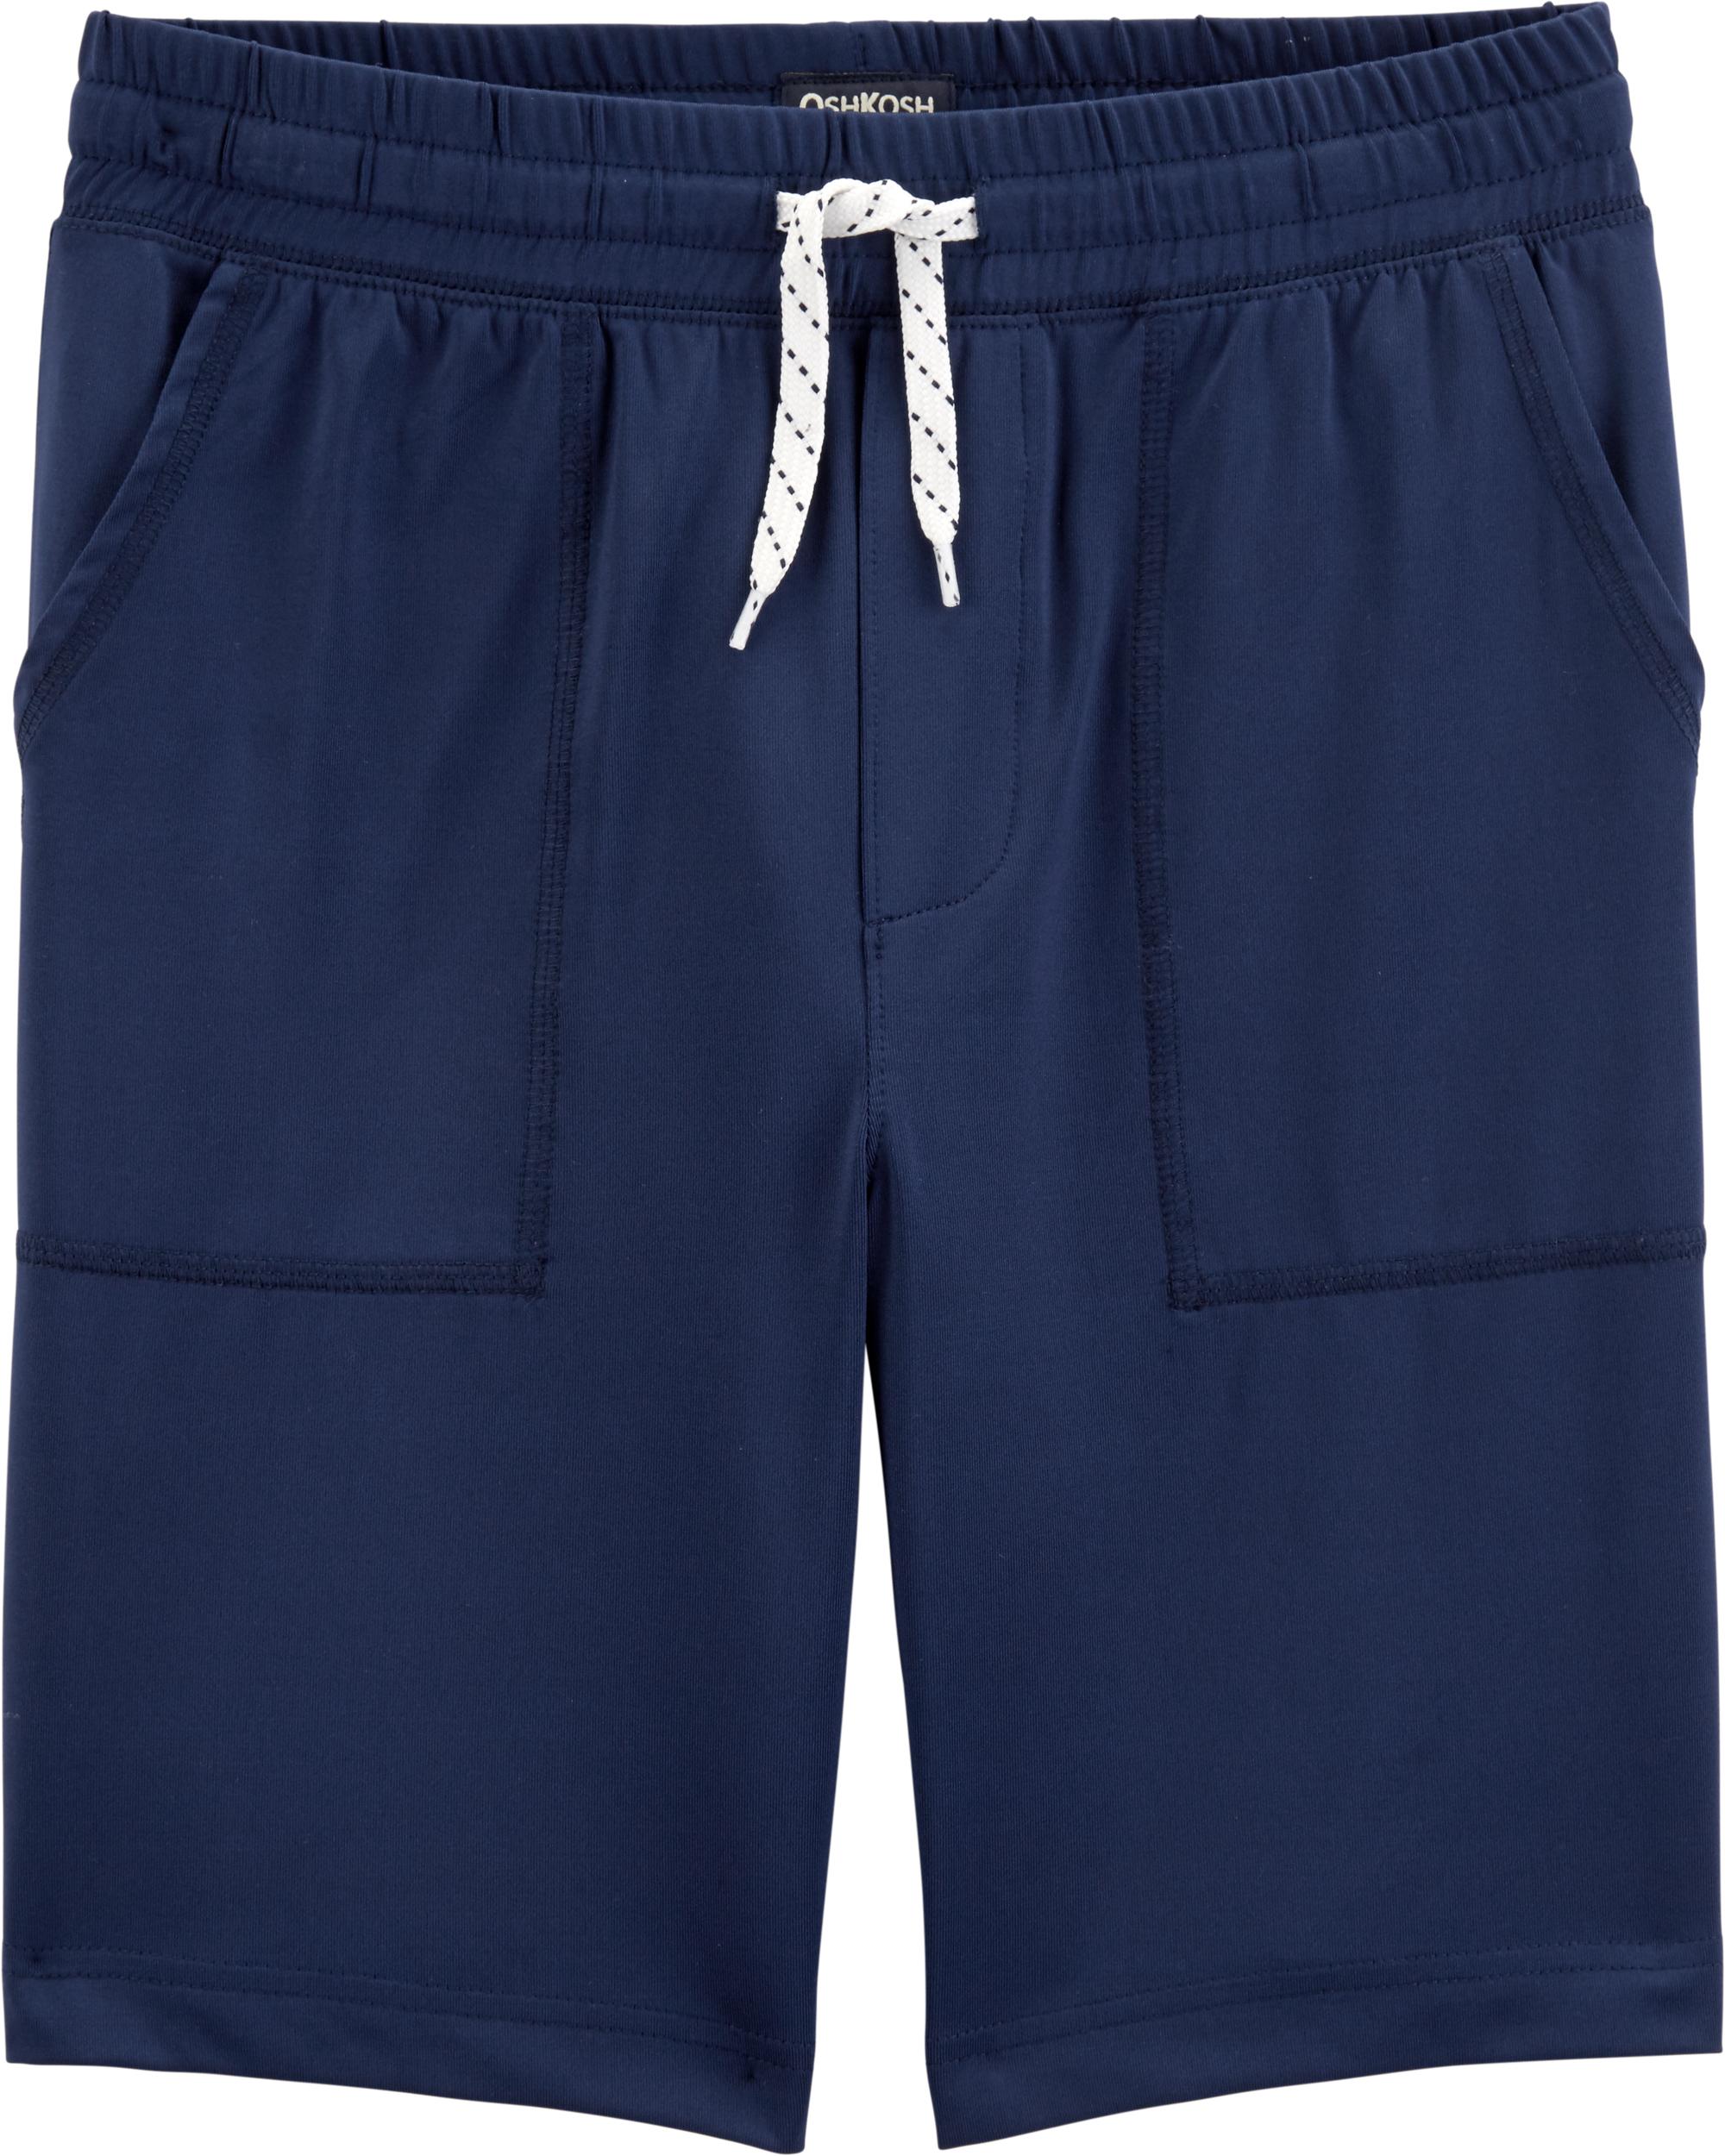 Moisture Wicking Pull-On Shorts | oshkosh.com